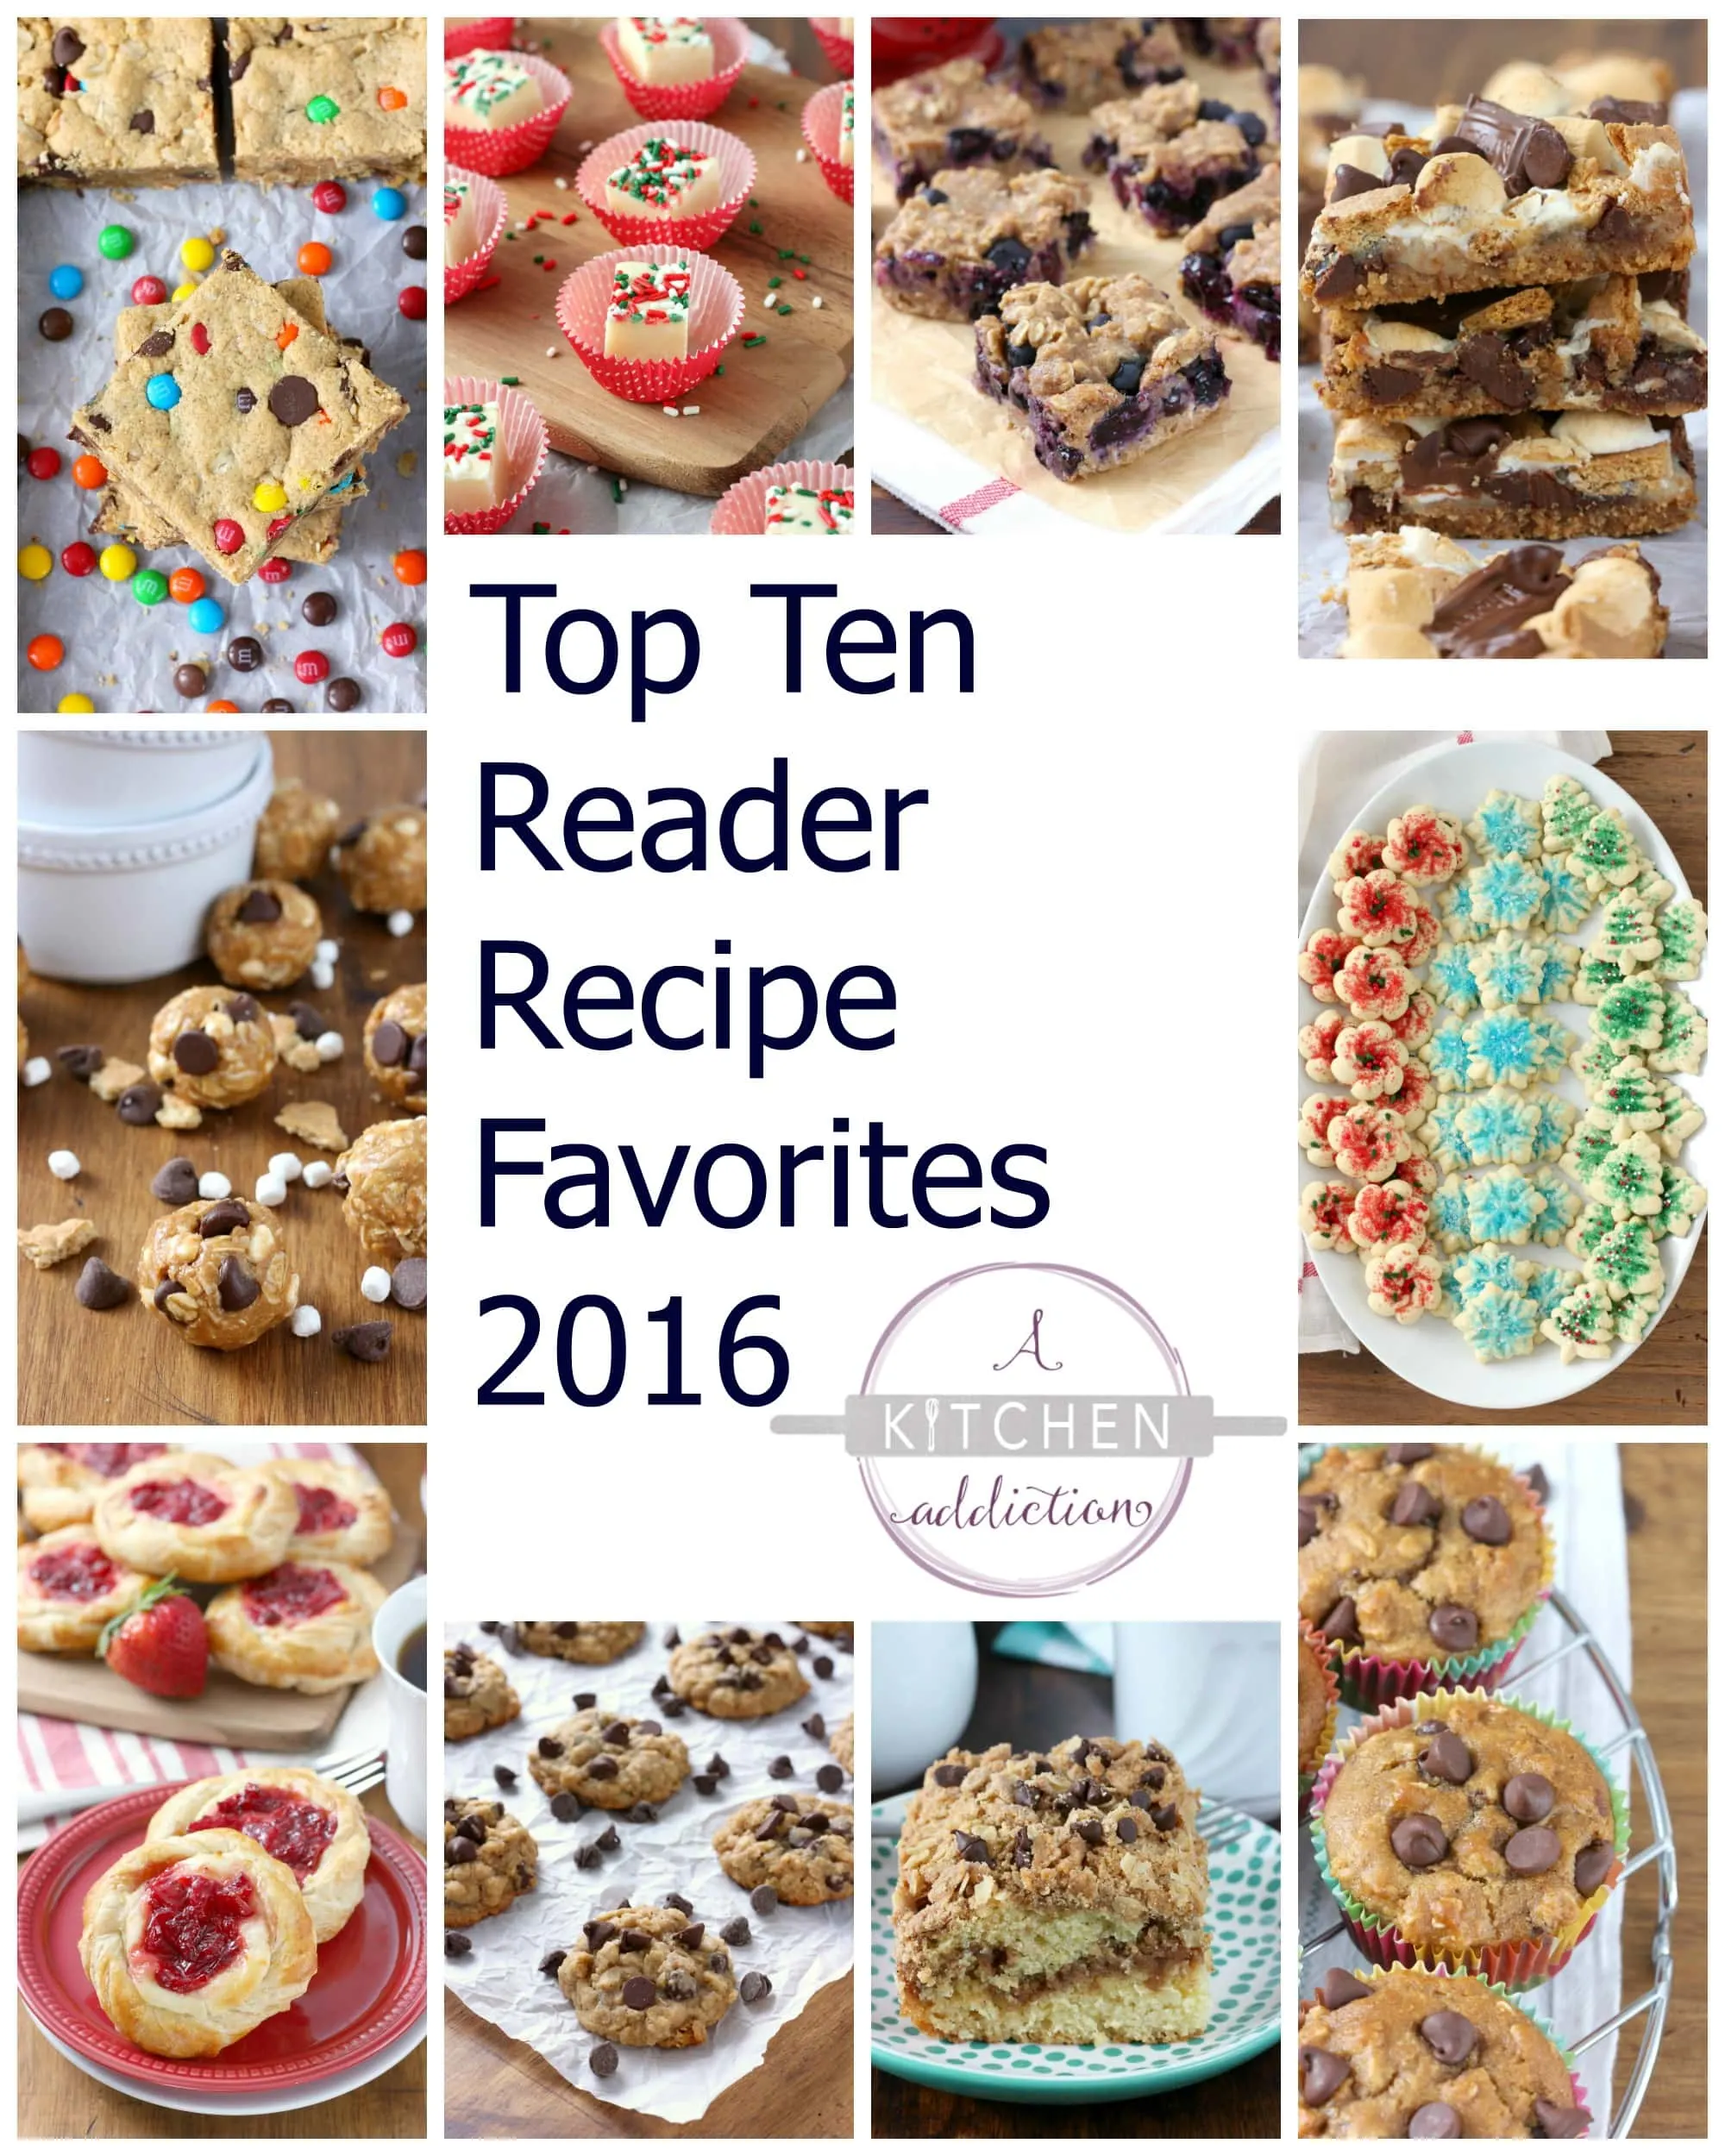 Top Ten Reader Recipe Favorites 2016